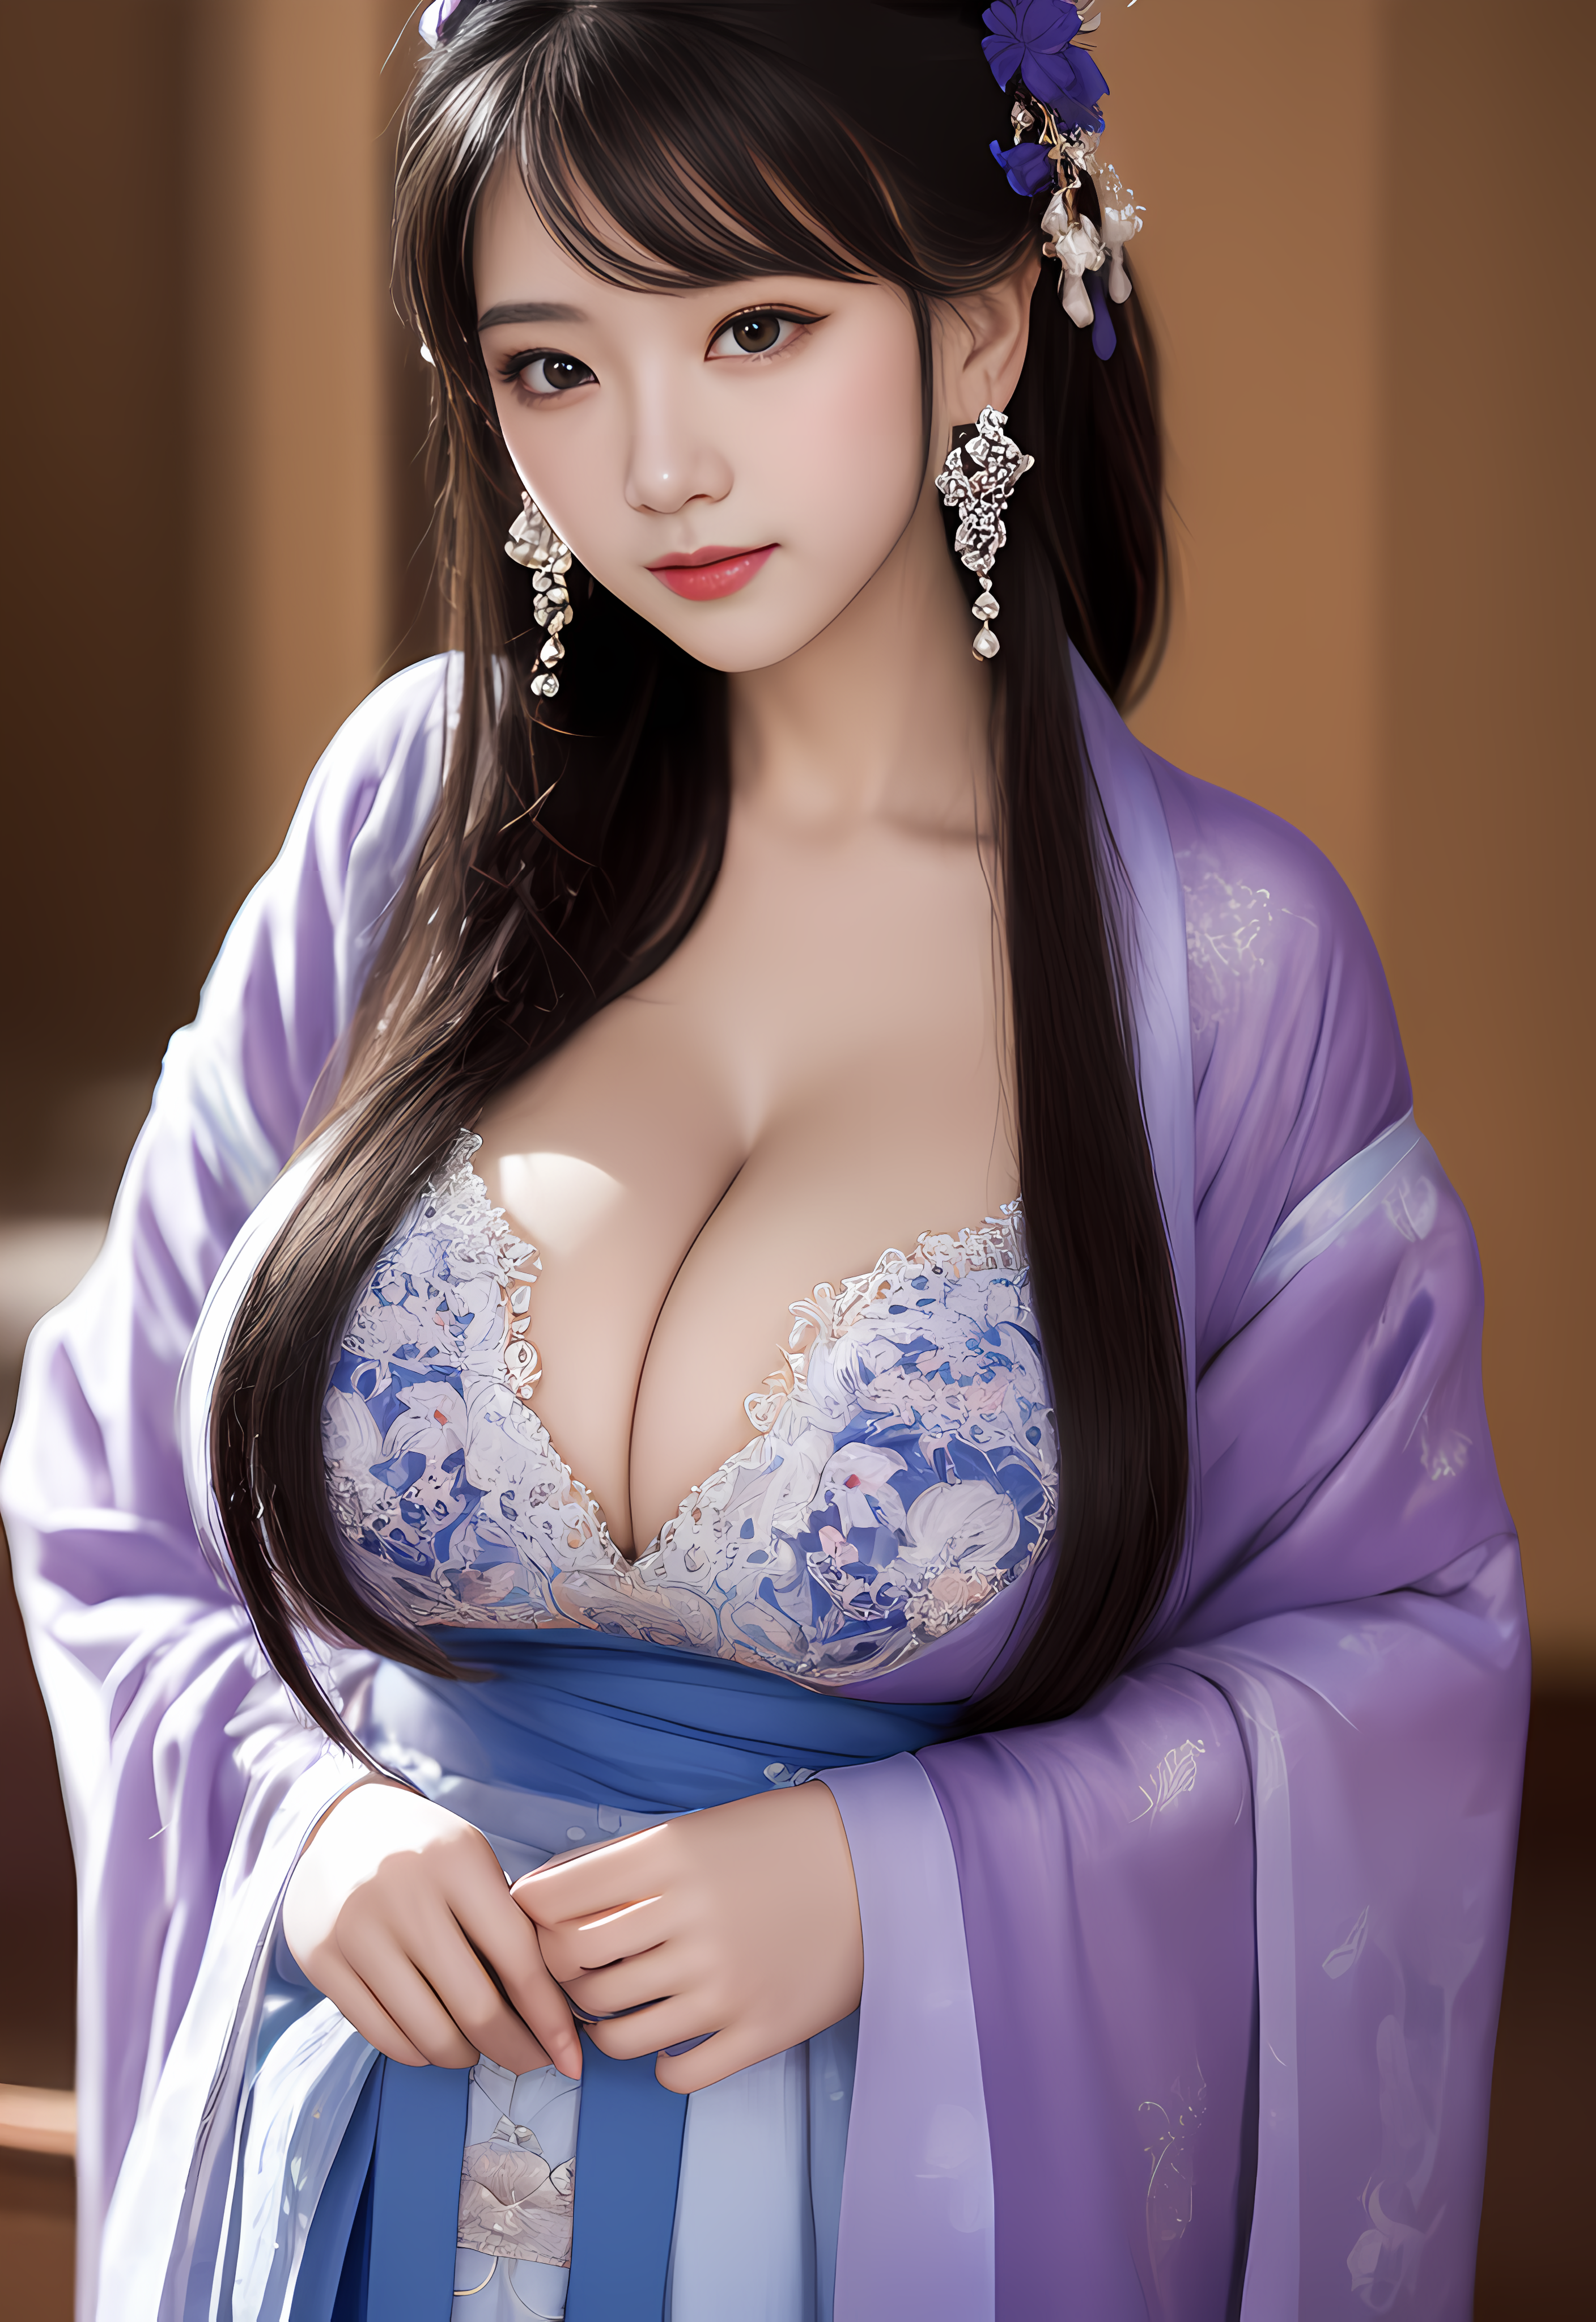 Women Asian Brunette Ai Art Stable Diffusion Dress Artwork Digital Art Pastania Vertical Looking At  2816x4096